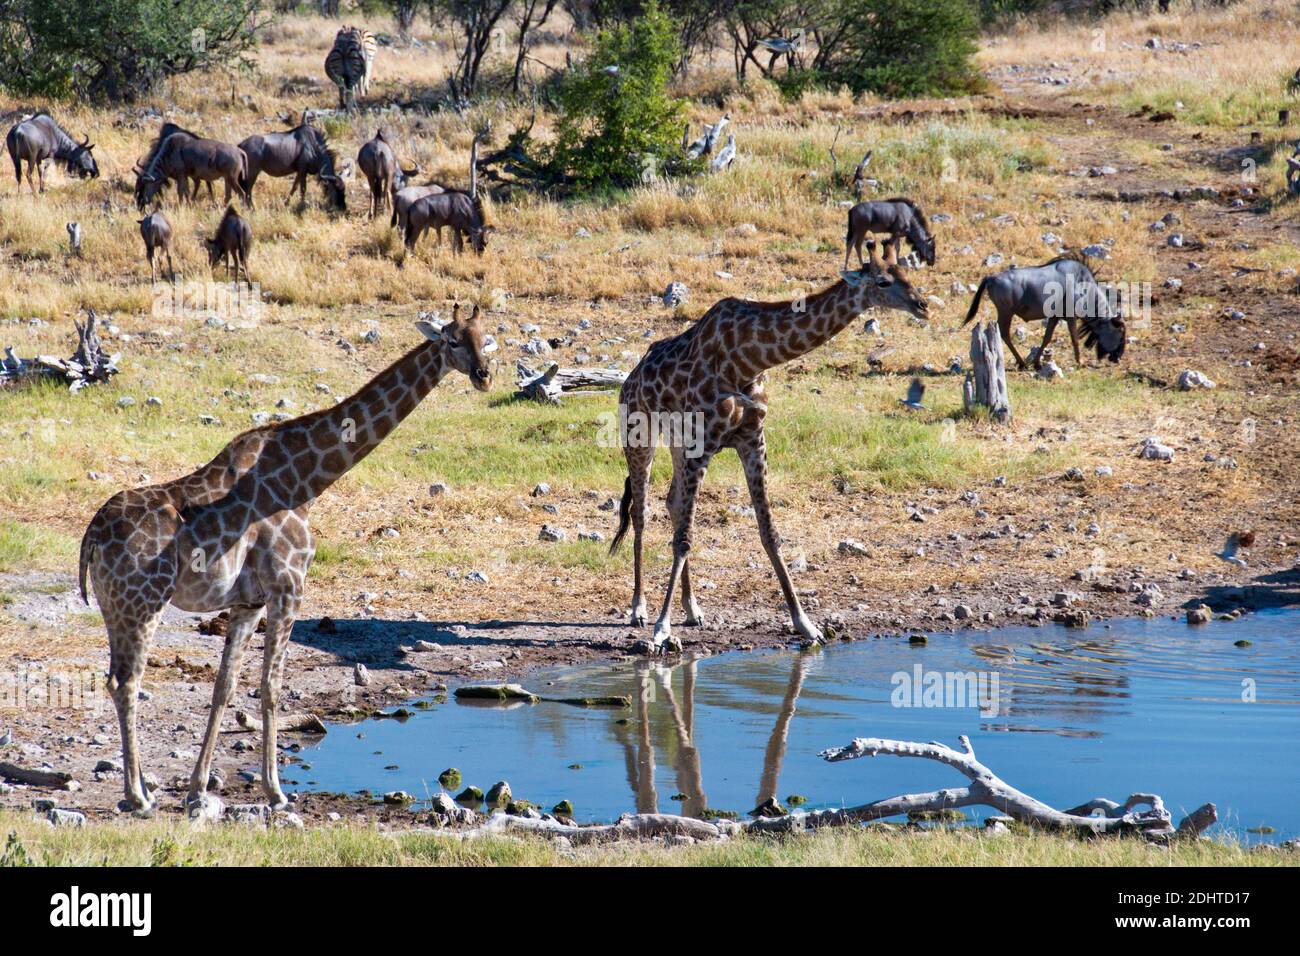 Giraffes drink at a waterhole in Etosha National Park, Namibia. Stock Photo